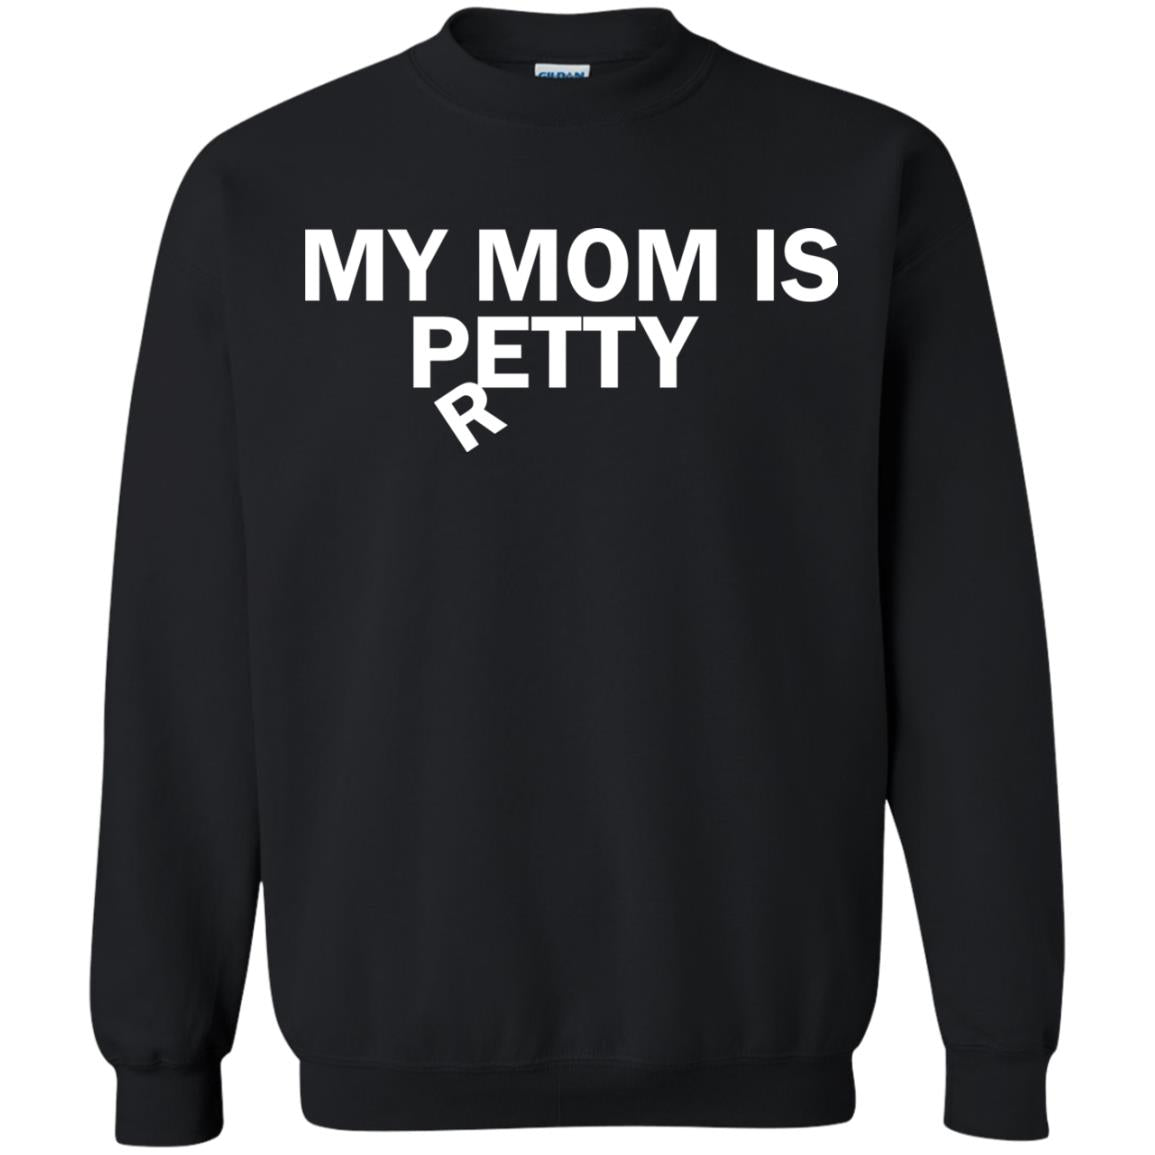 My Mom Is Petty Or Pretty Shirt